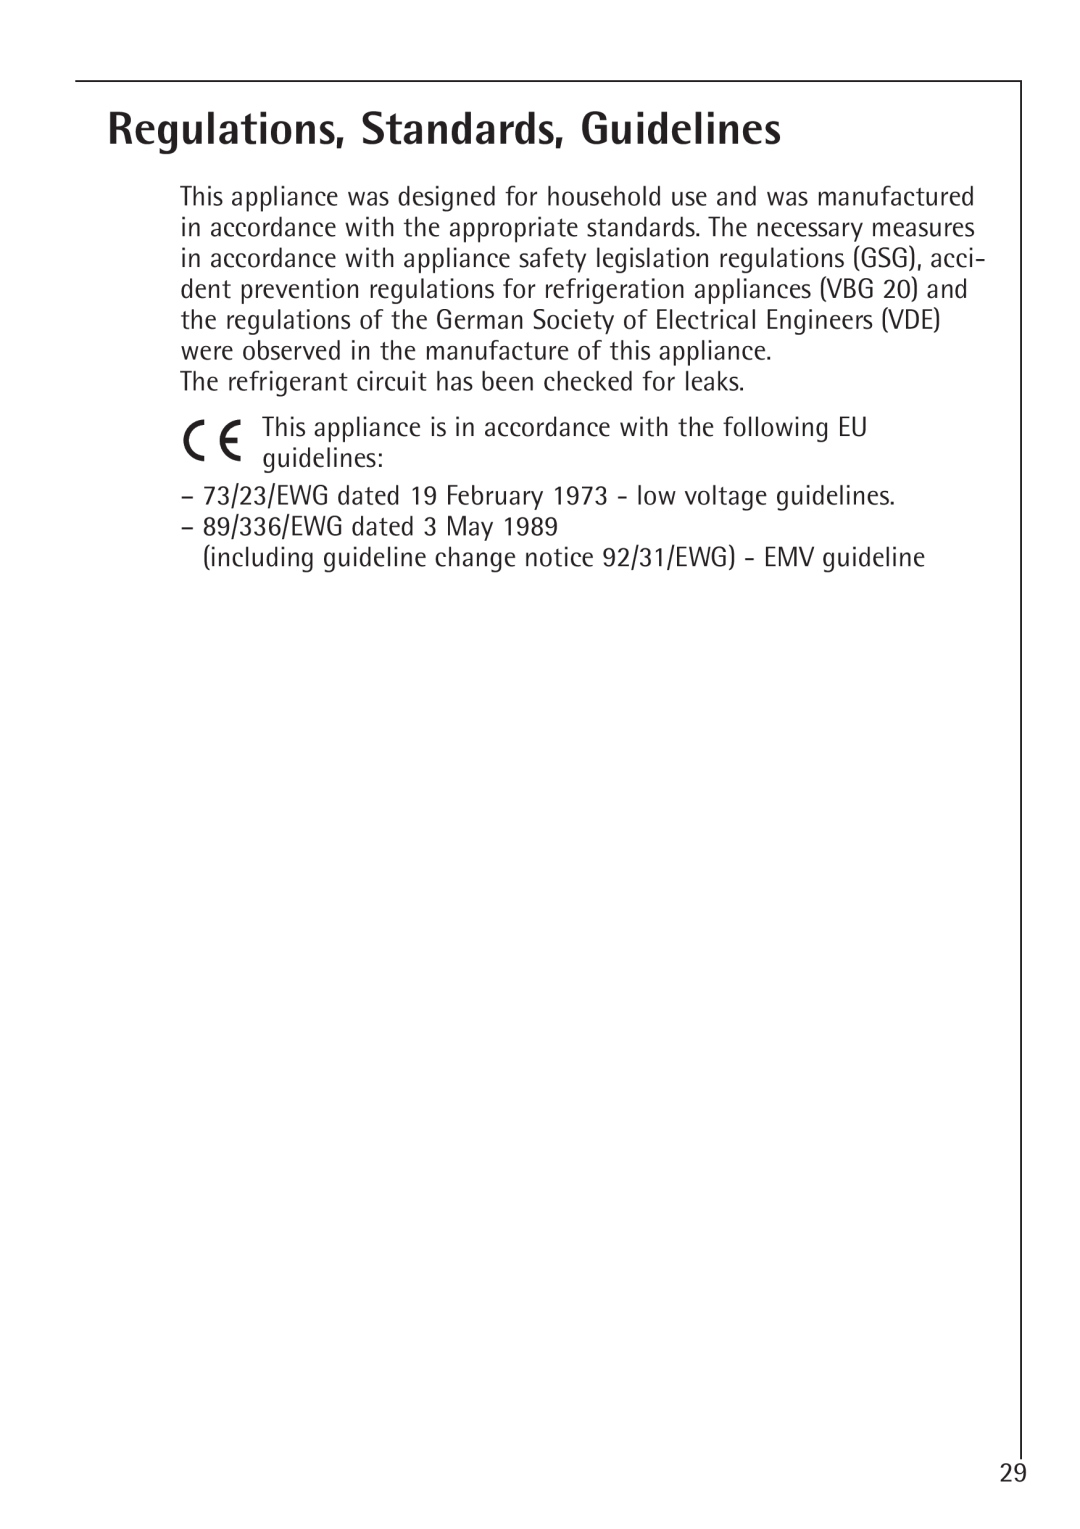 Electrolux SANTO U 86040 i installation instructions Regulations, Standards, Guidelines 